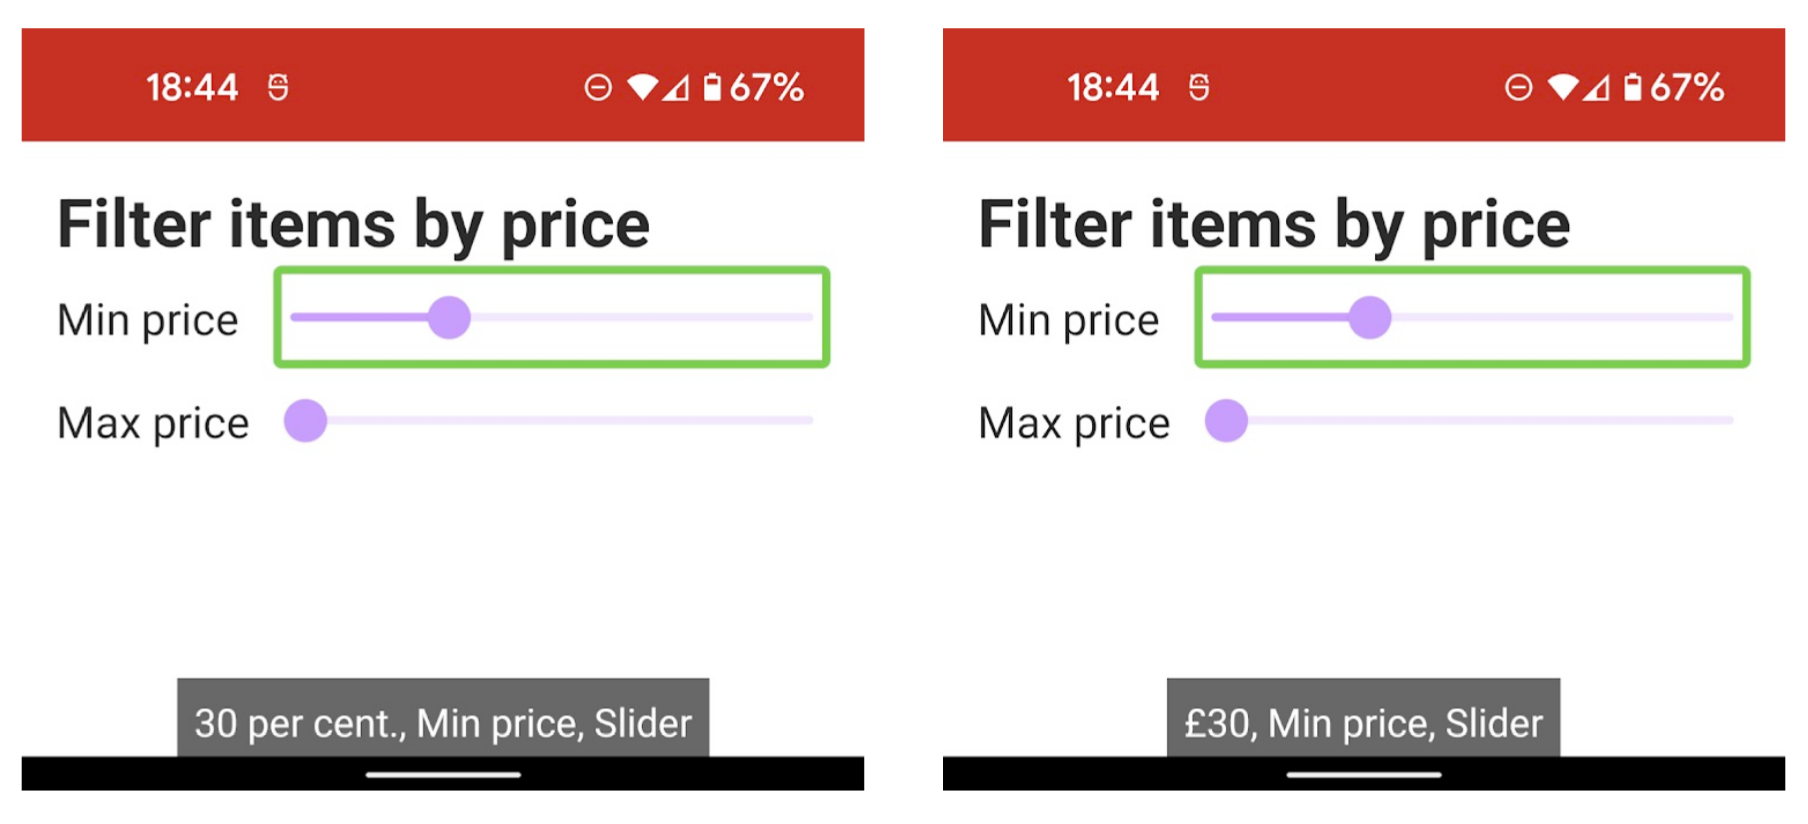 Image shows TalkBack focused on a slider (or seekbar). The description reads “30%, min price, slider”. Image on the right shows the same but the description reads “£30, min price, slider”.